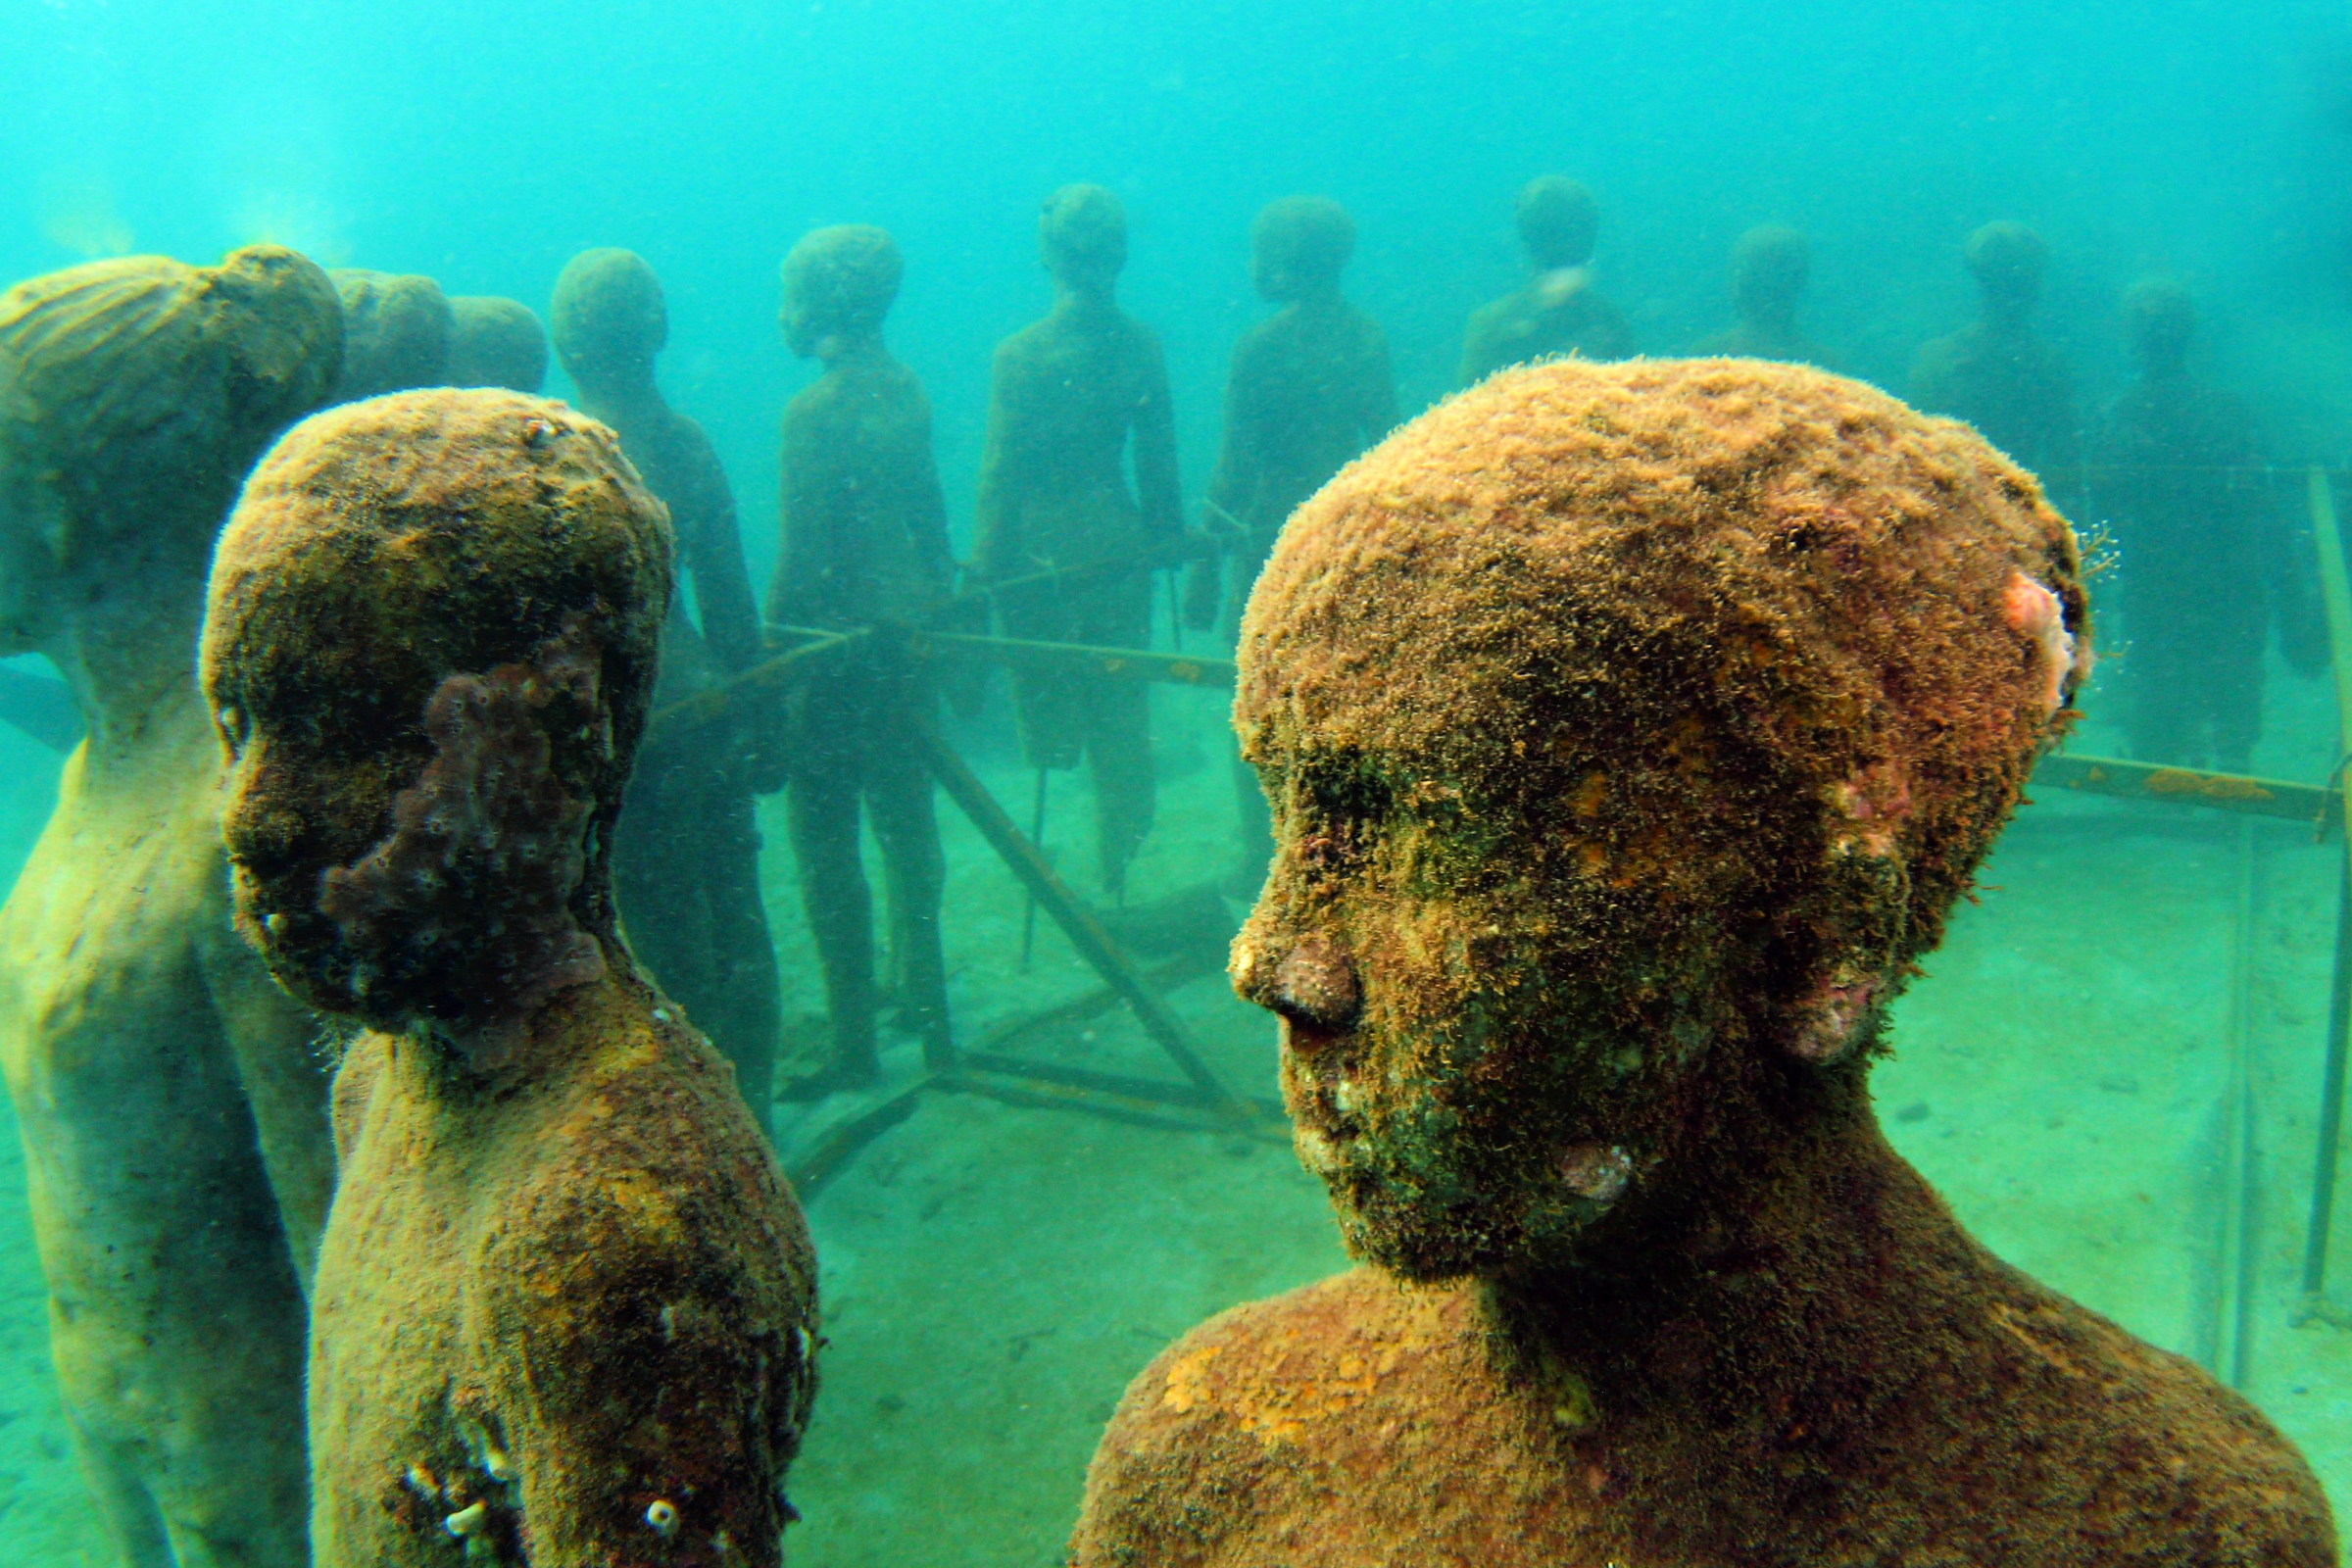 The Grenada Underwater Sculpture Park